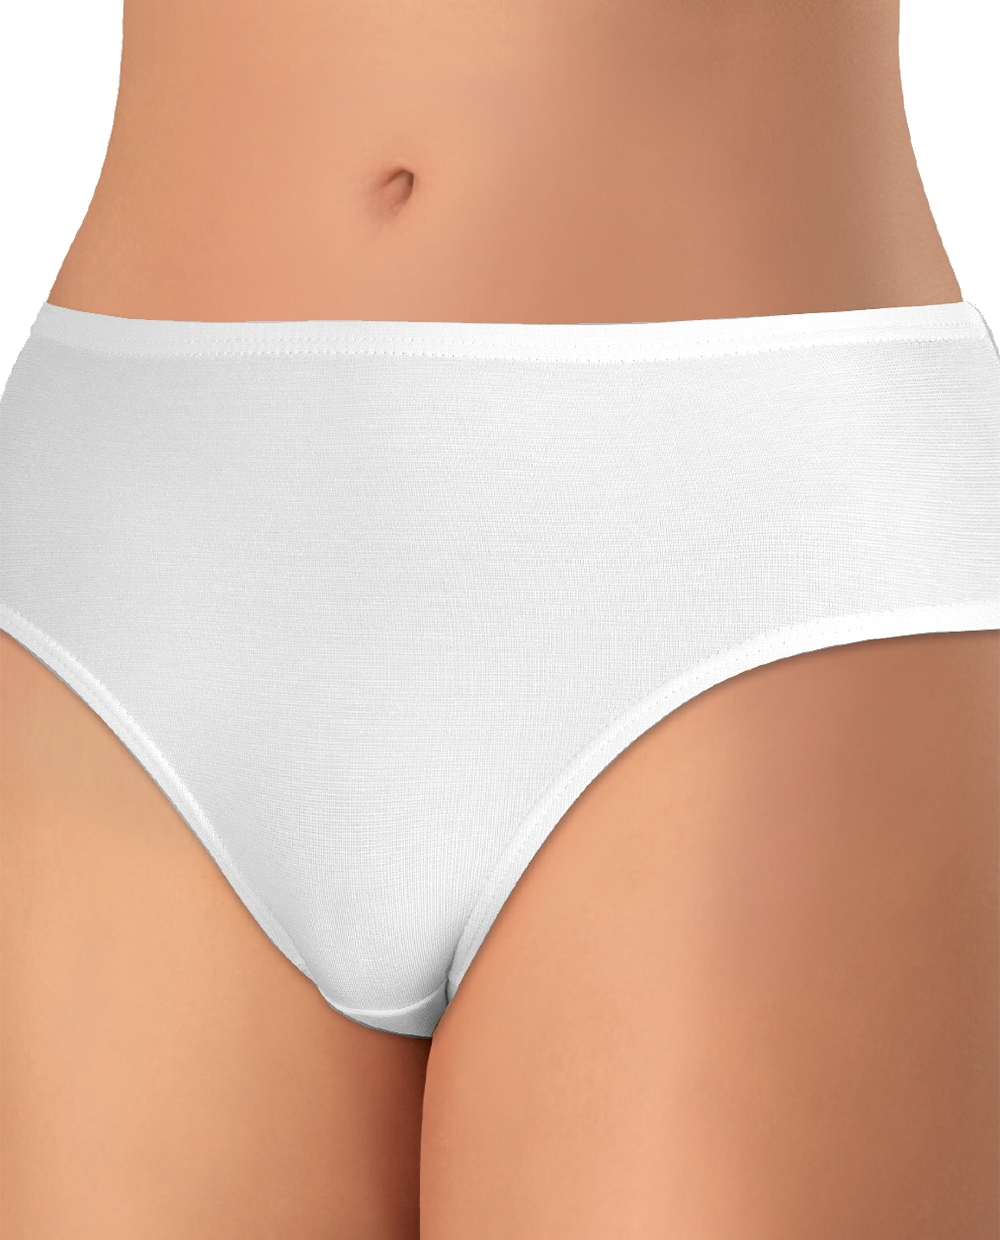 Andrie PS 219 dámské kalhotky Barva: bílá, Velikost: 2XL